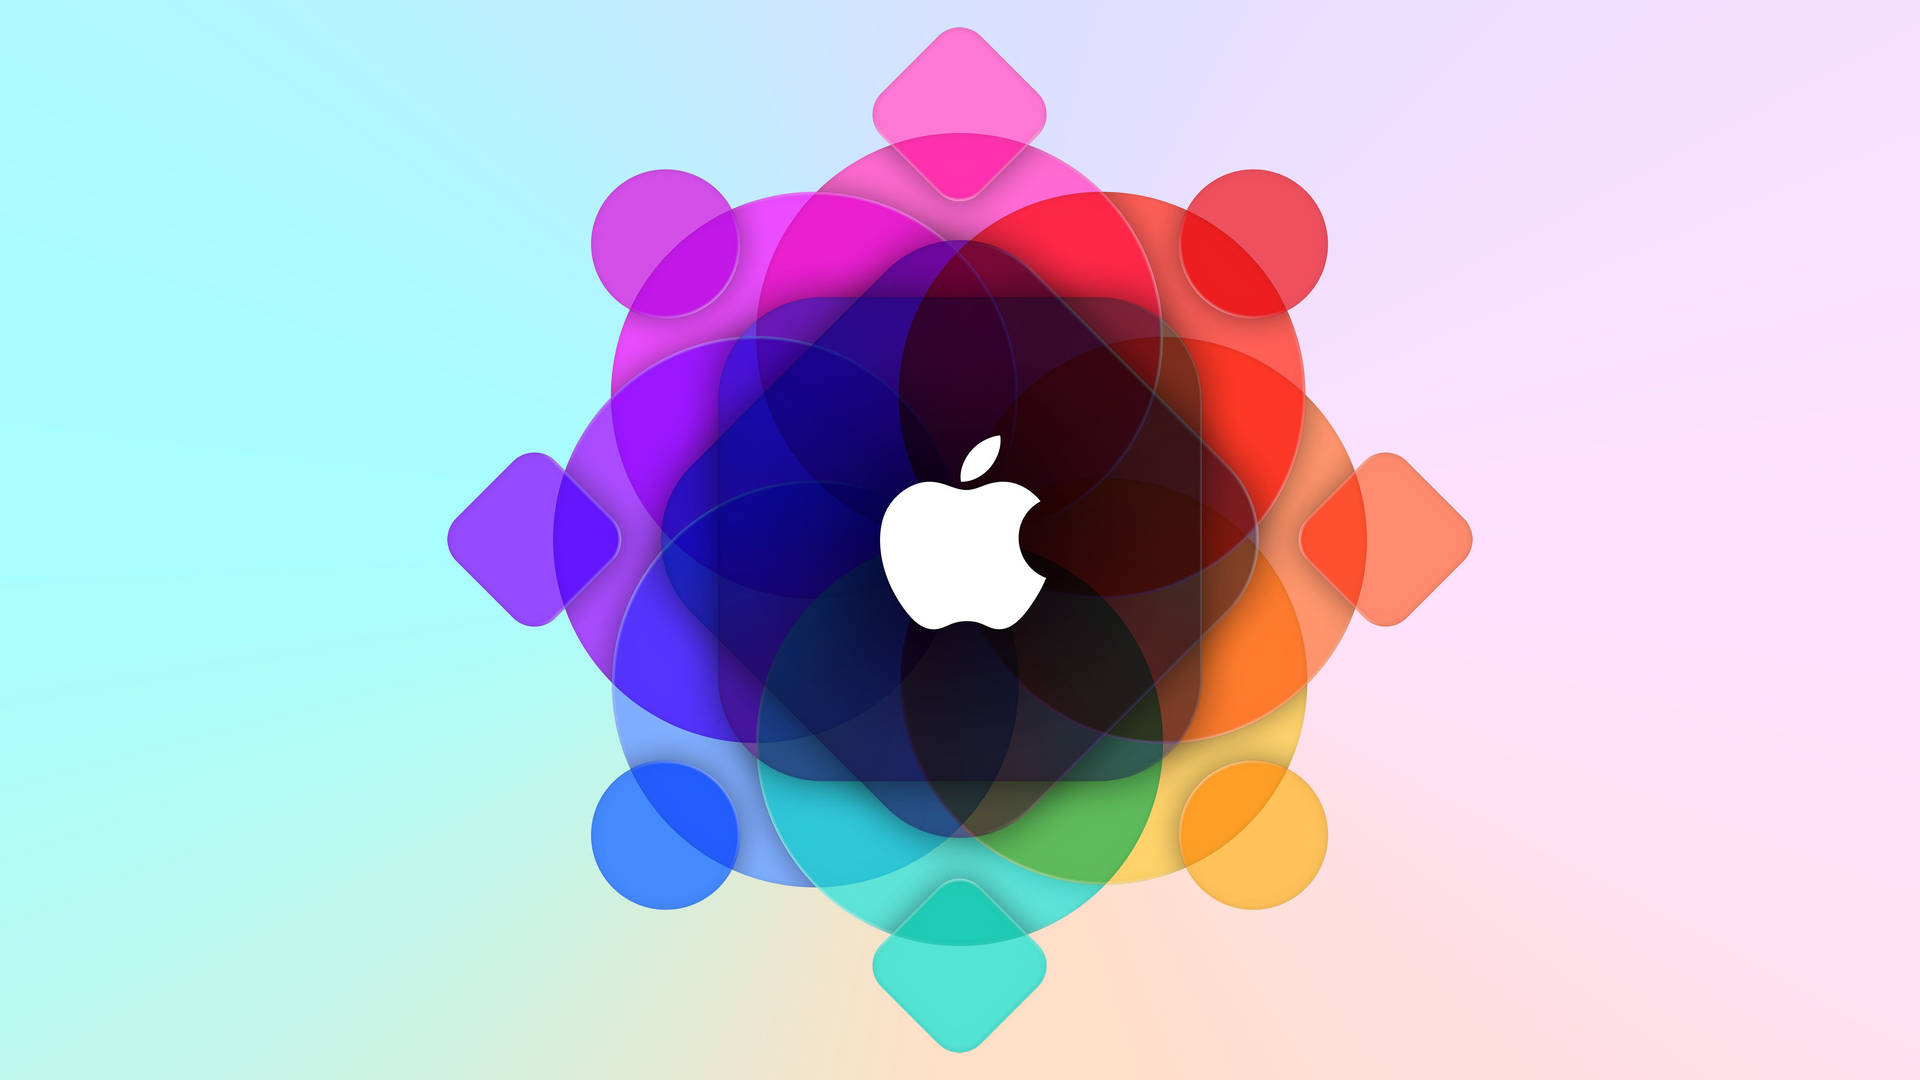 Vibrant Apple Logo With Spheres Background